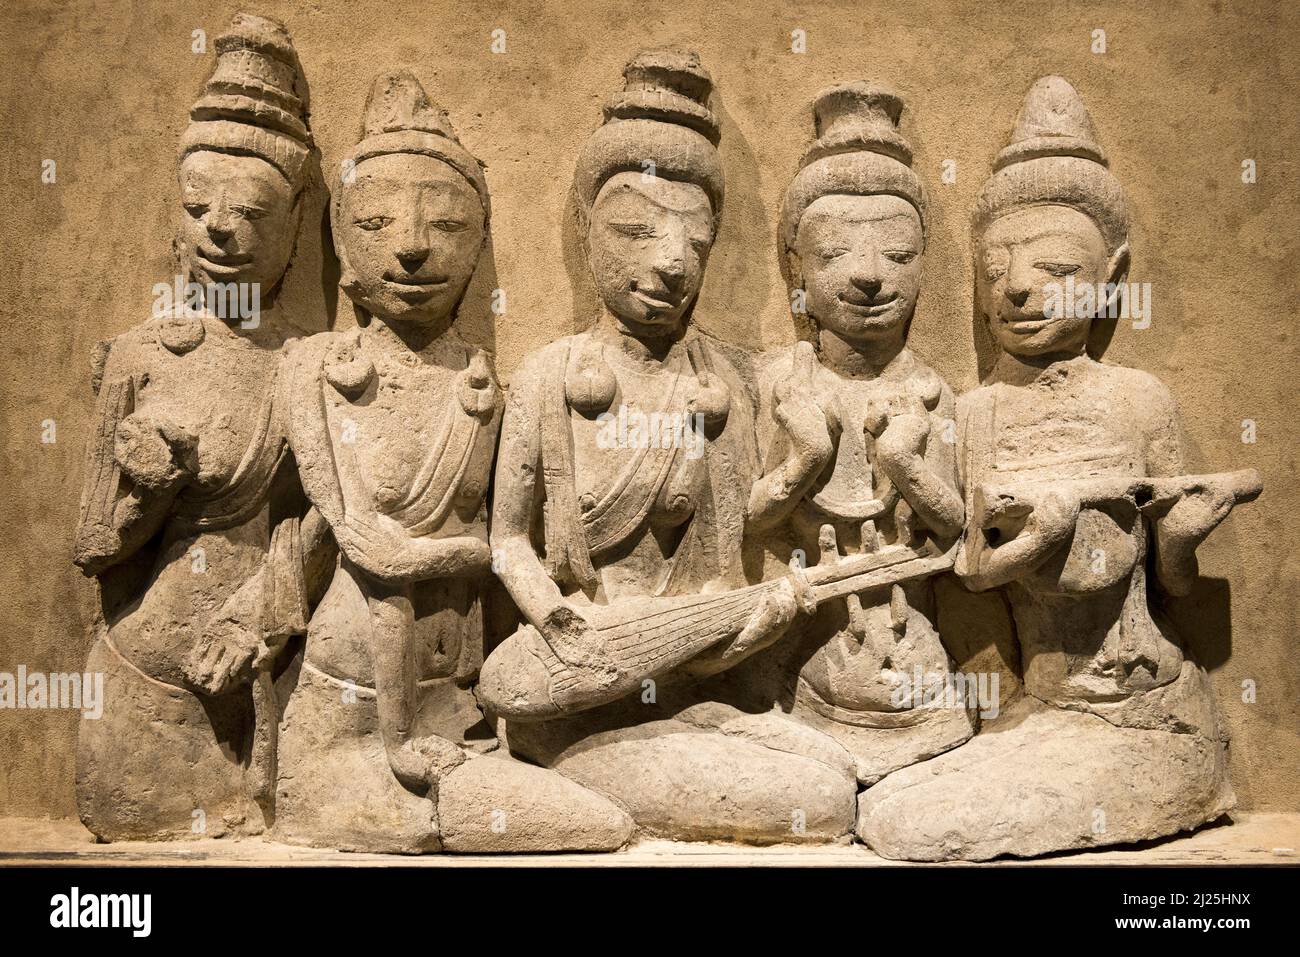 Bas relief from Khu Bua archaeological site. 650-700 C.E., Mon Dvaravati culture, National Museum, Bangkok, Thailand Stock Photo